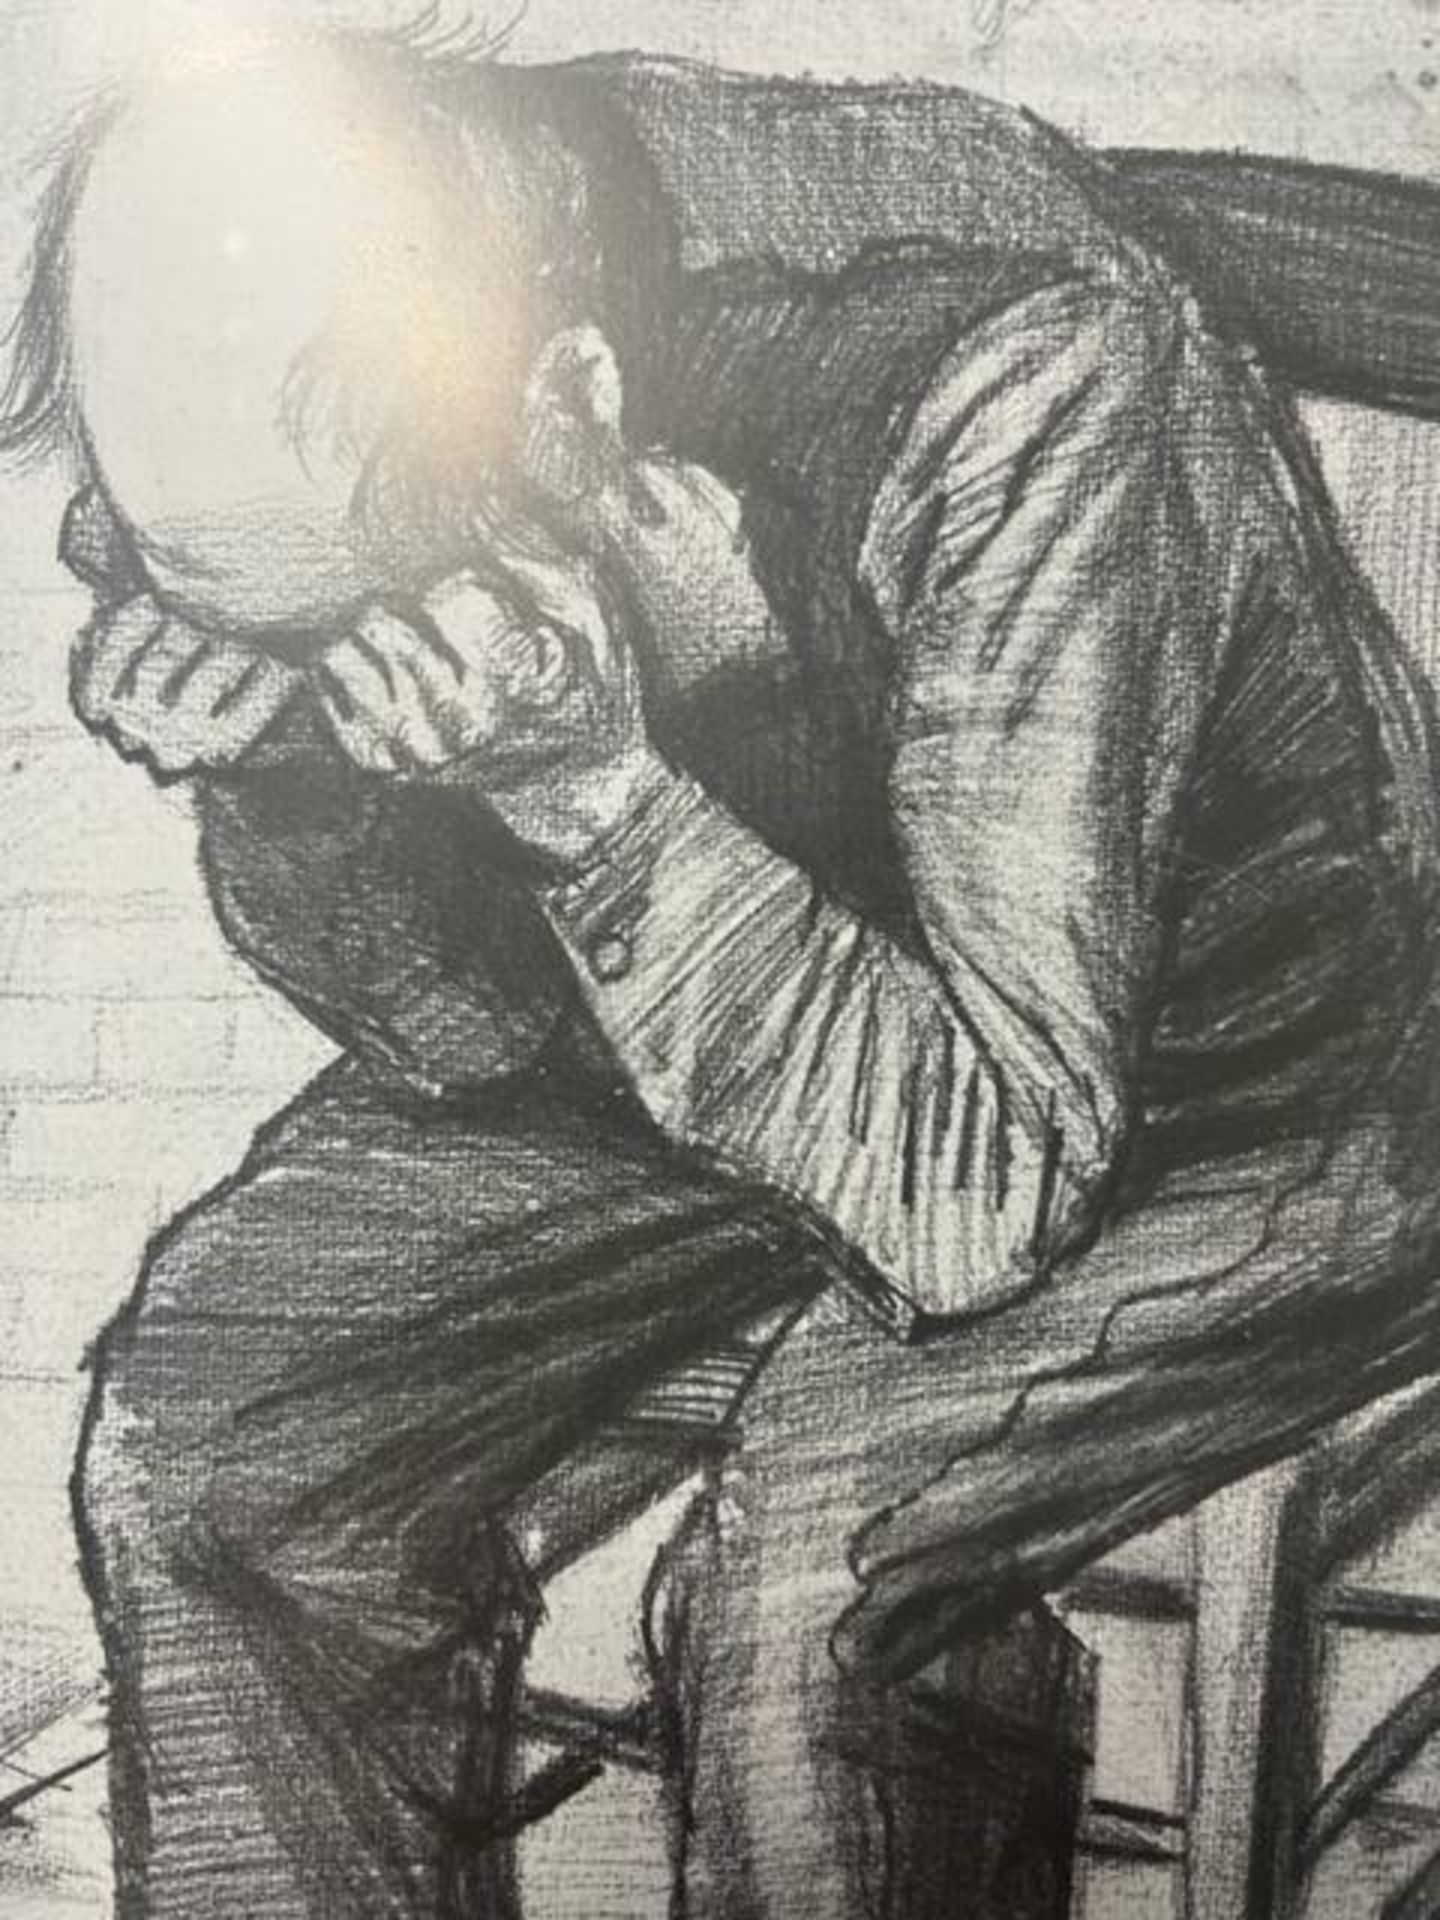 Vincent van Gogh "Old Man in Grief" Print. - Image 3 of 6